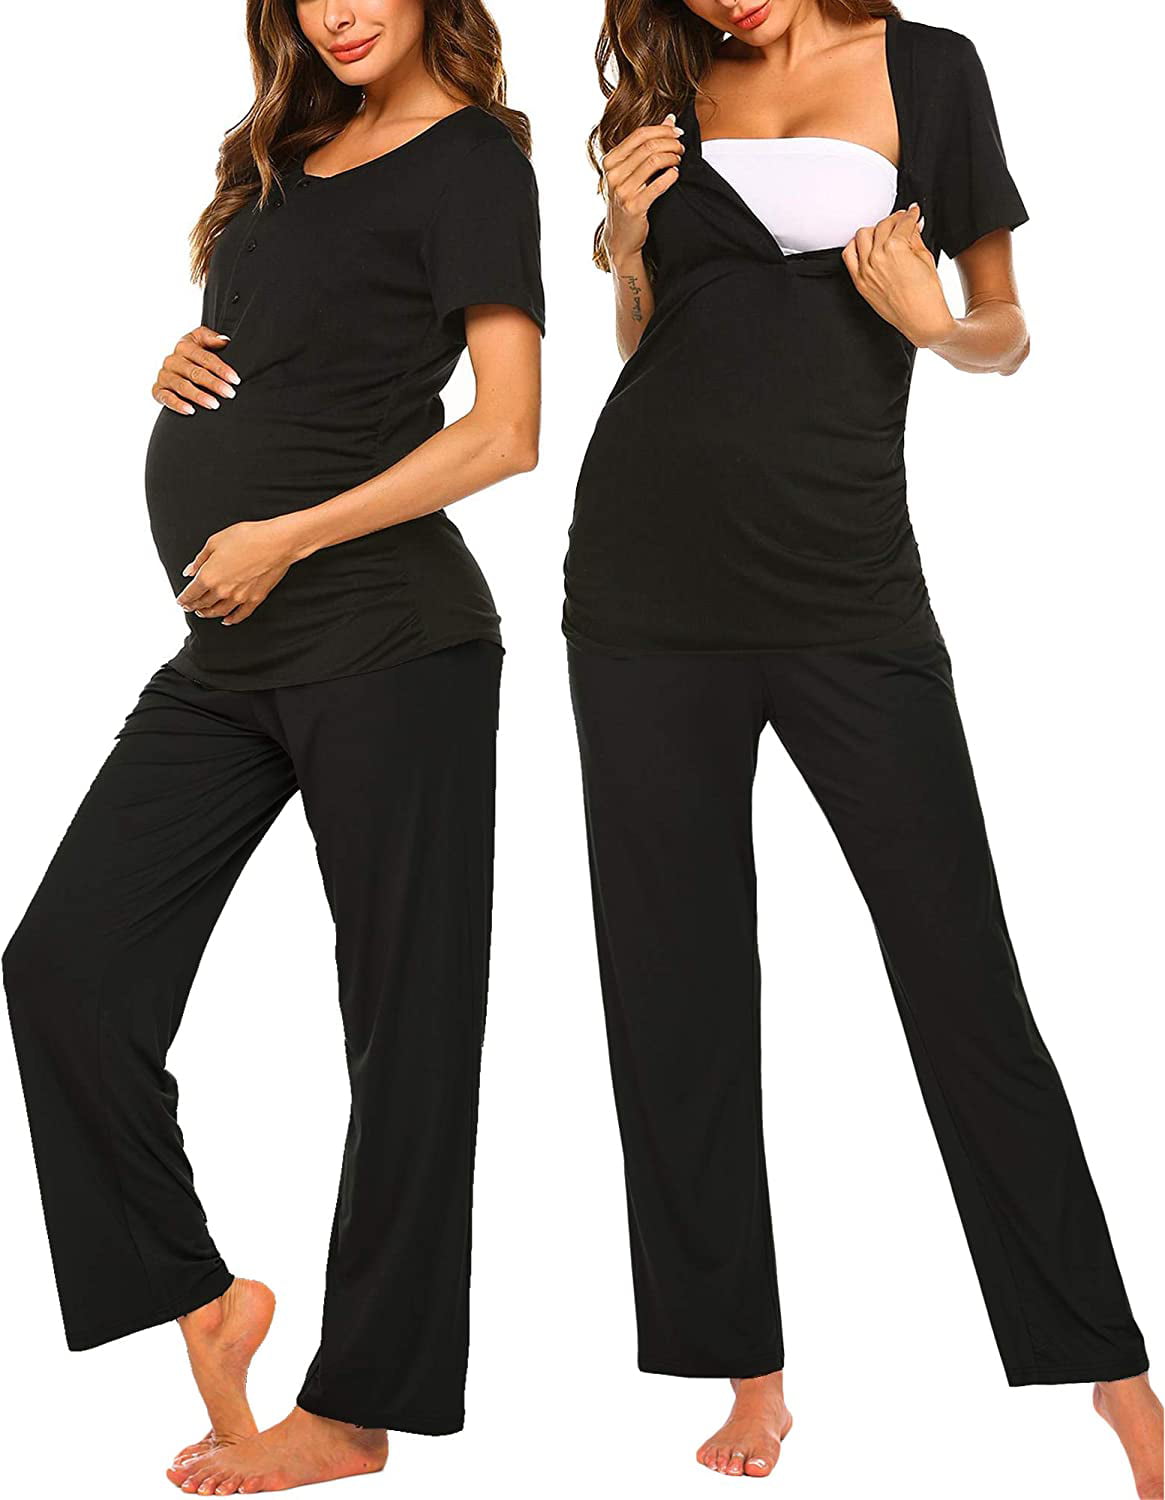 Ekouaer Women's Maternity Nursing Pajamas Sets Breastfeeding Printed Sleepwear Short Sleeve 2 Pcs Henley Top and Pants Set 